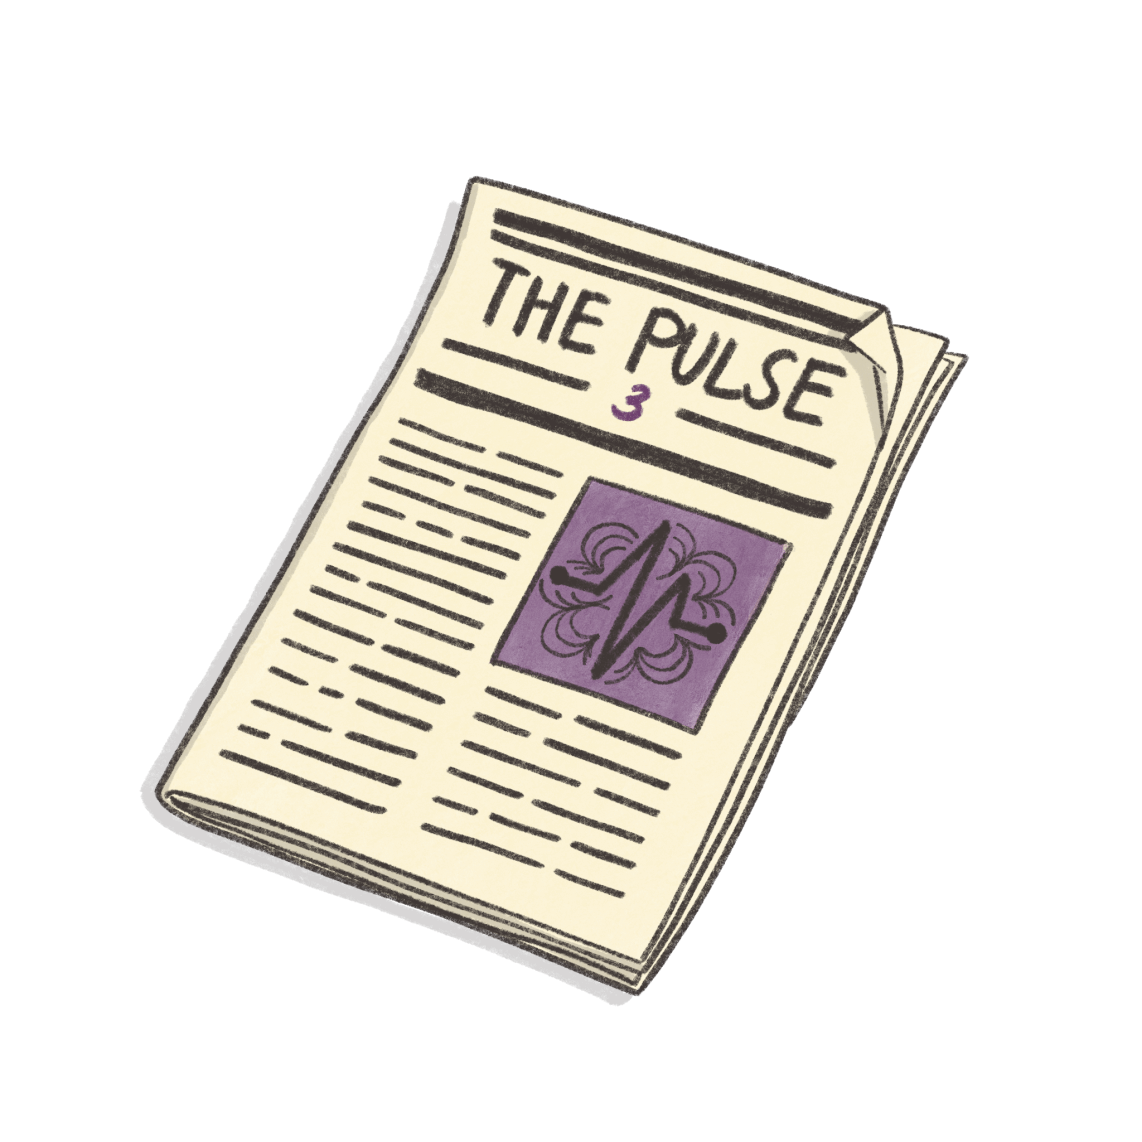 The Apoio Pulse – Issue Three